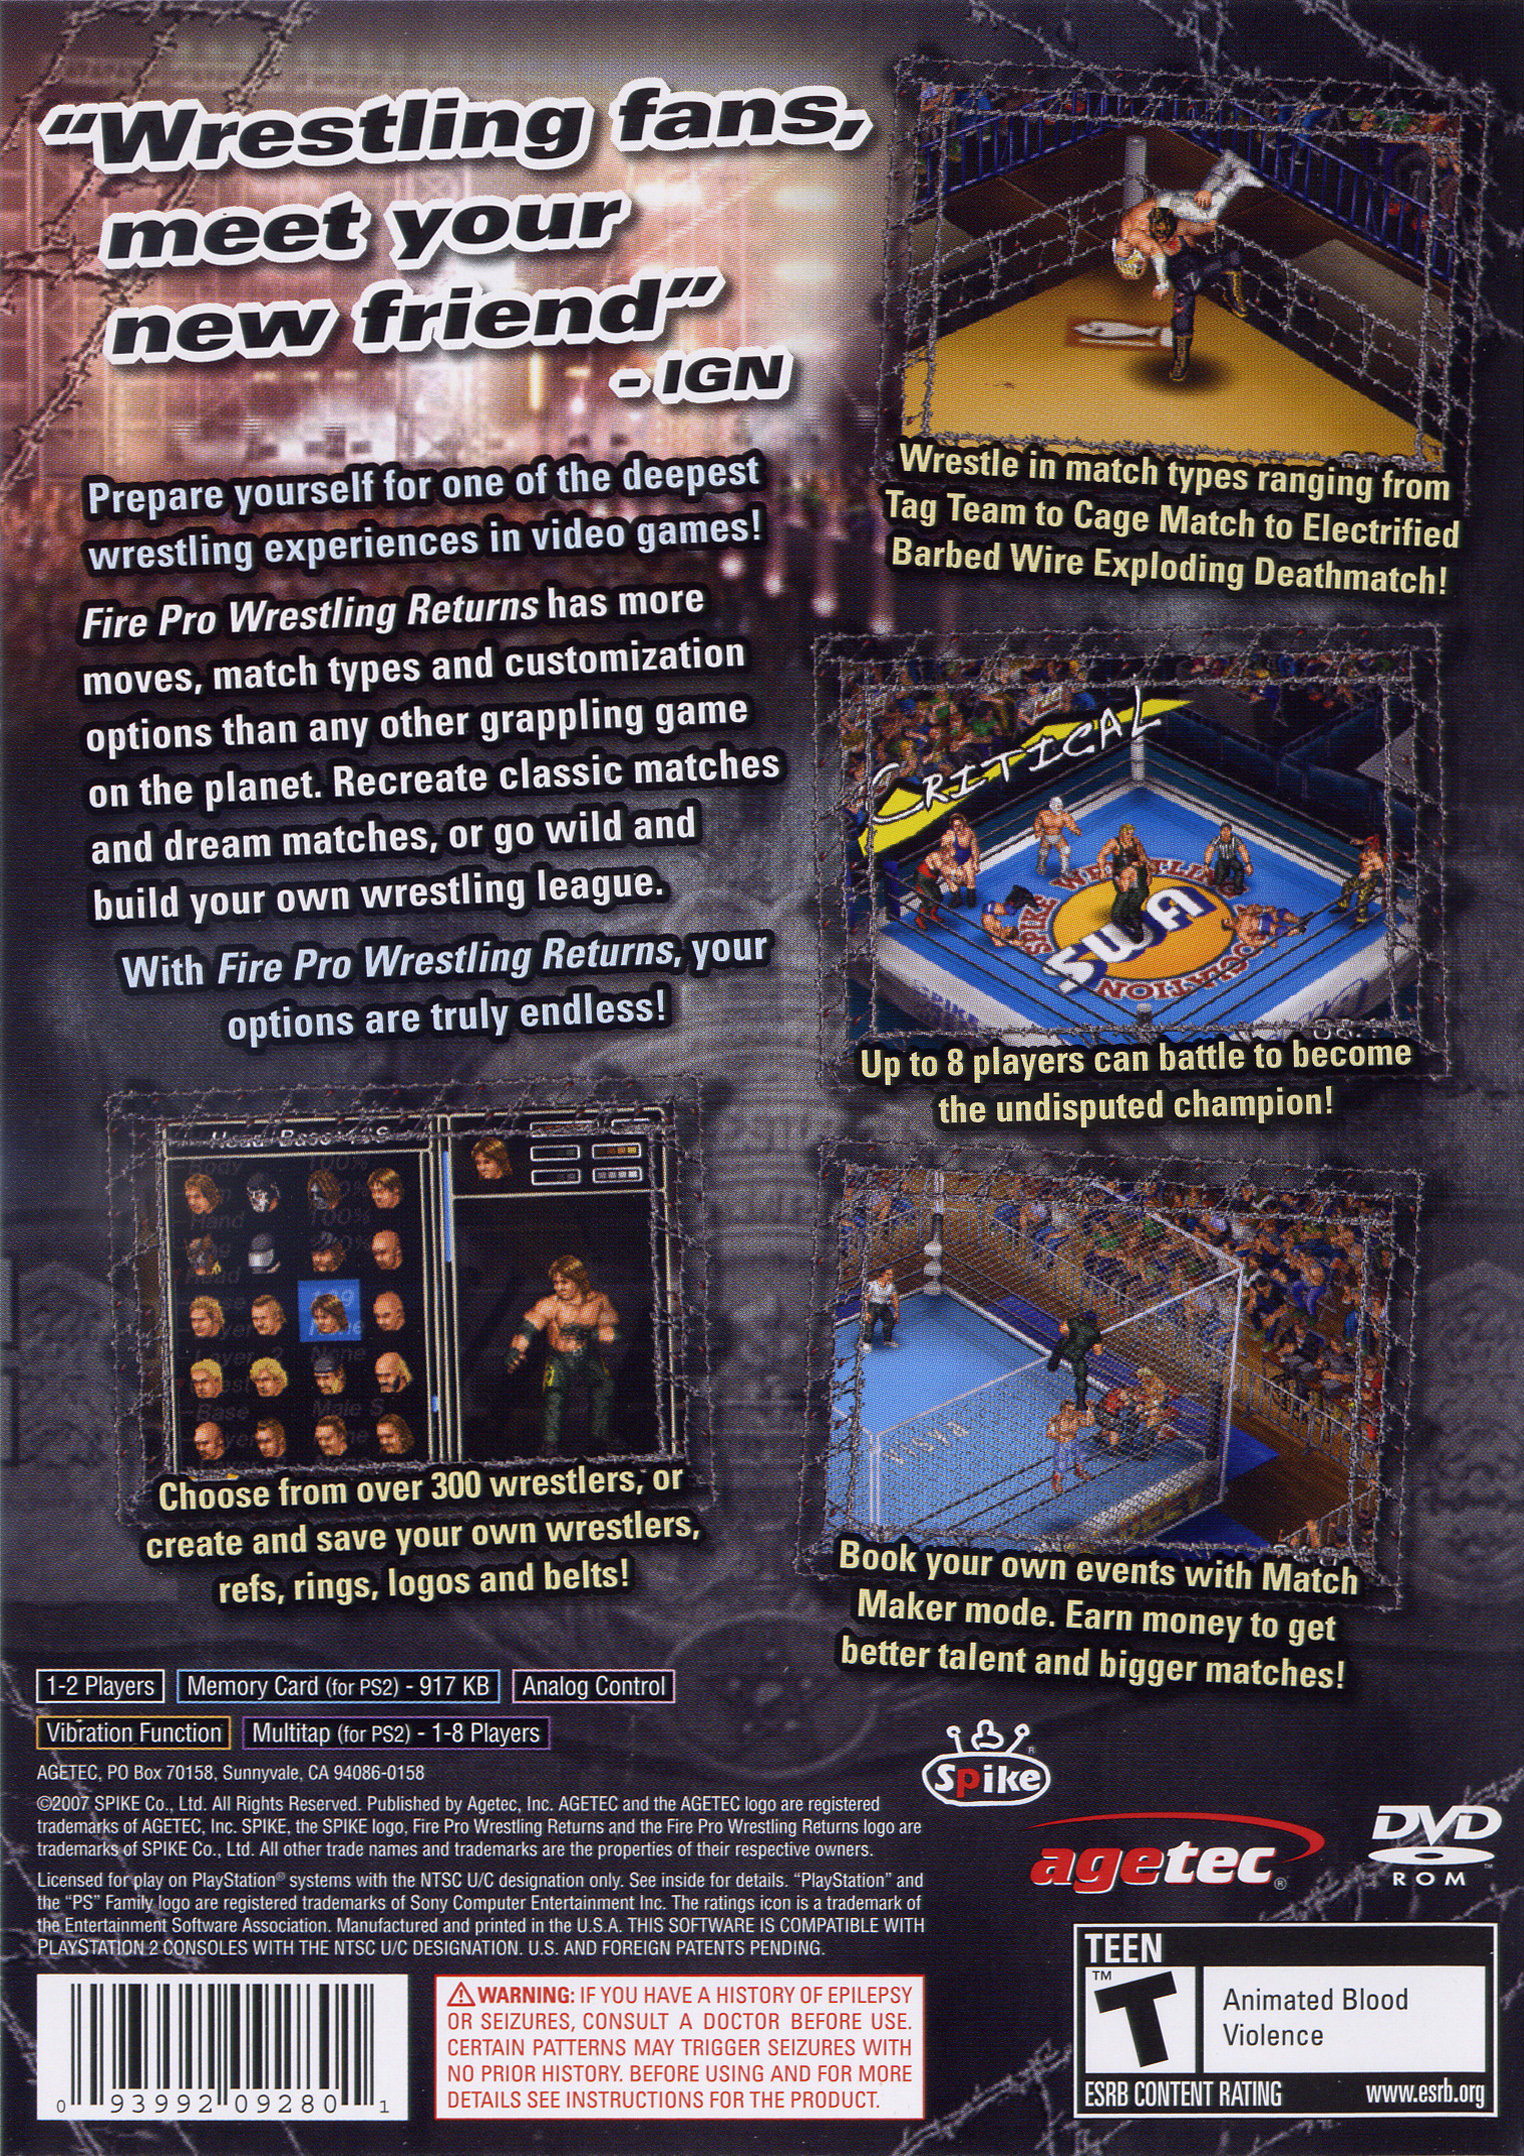 Fire pro wrestling returns free download pc